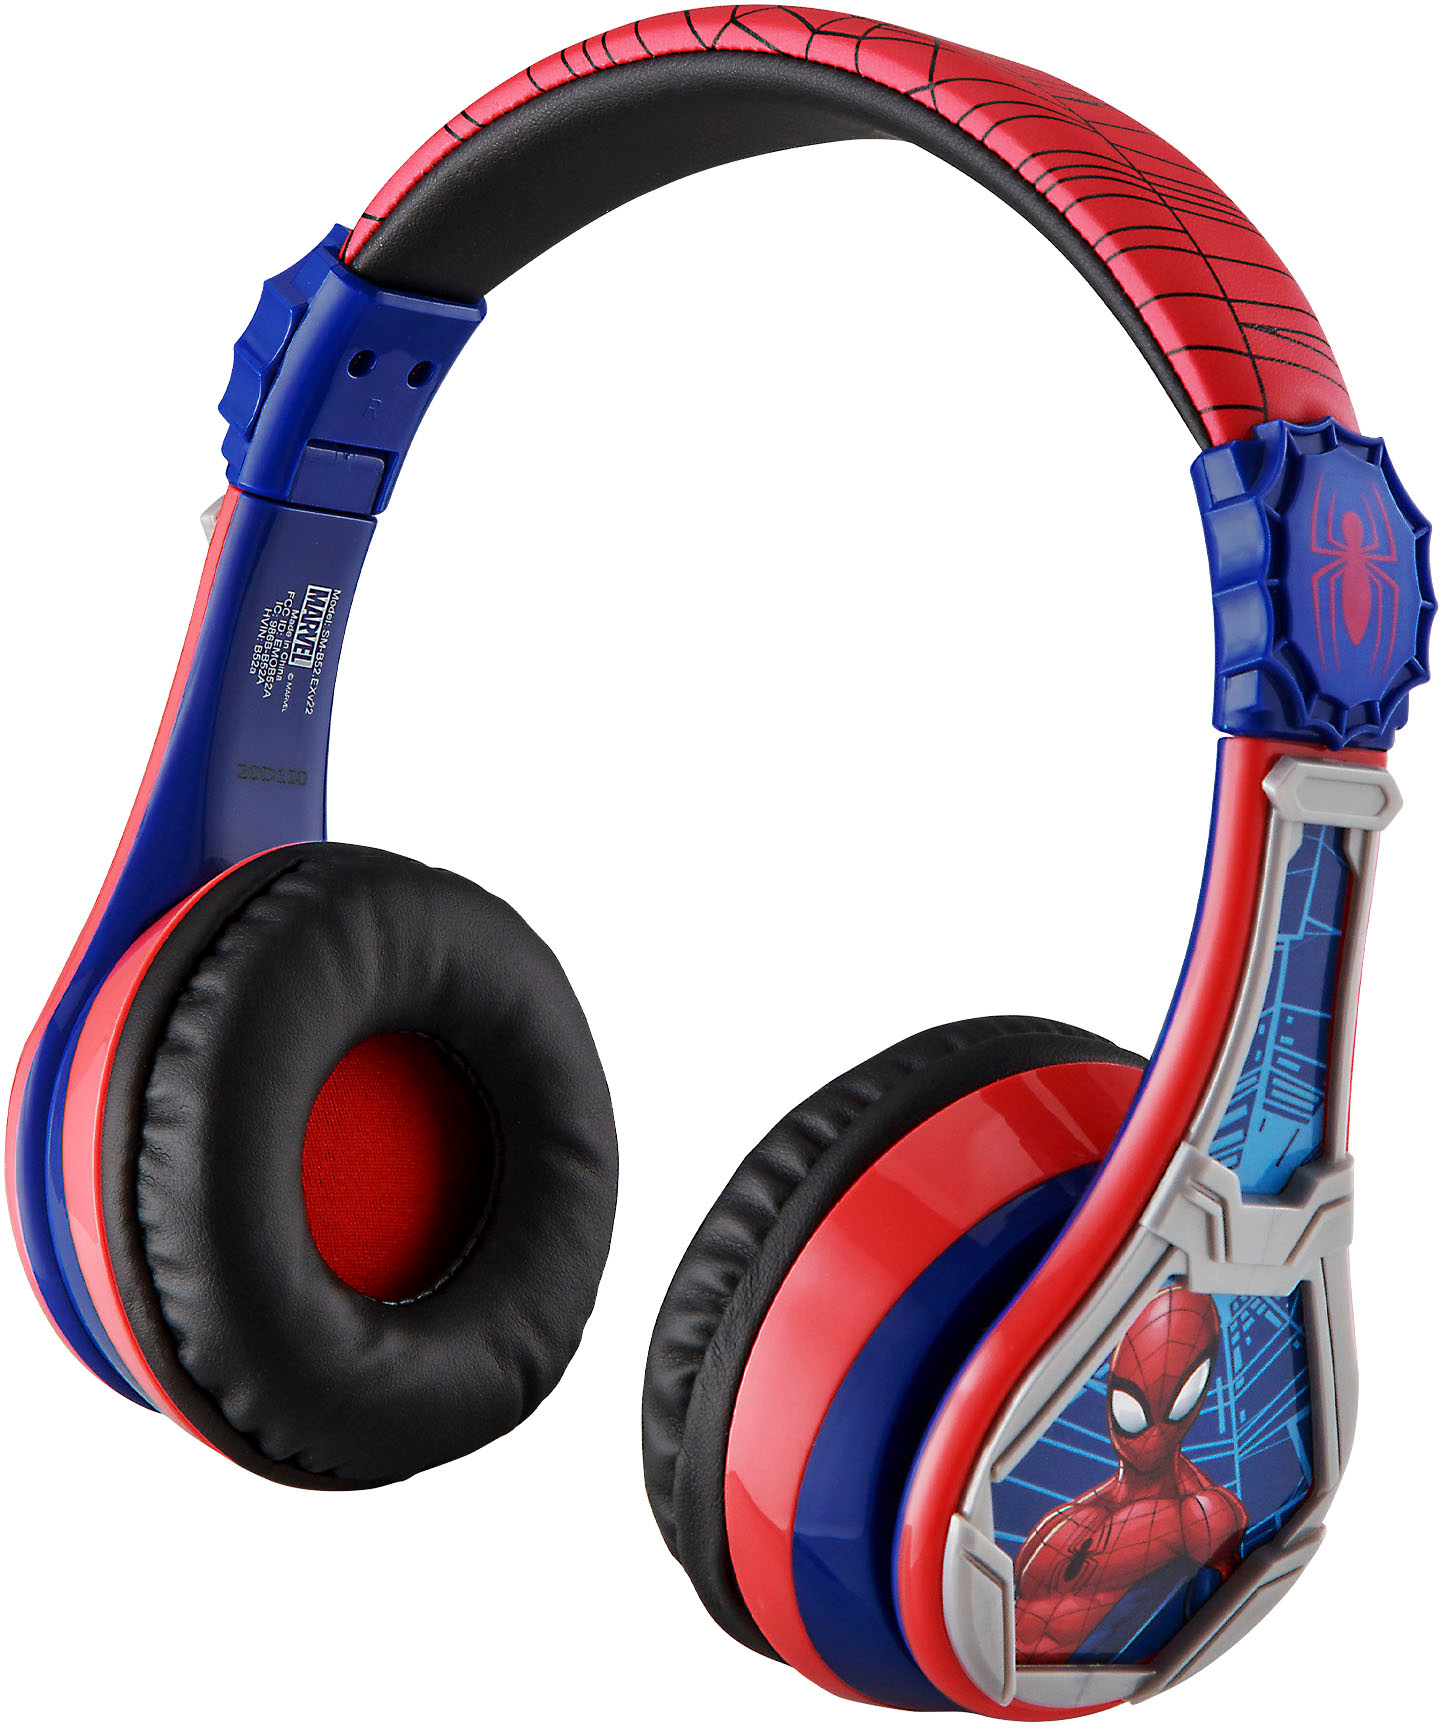 Angle View: eKids - Spider-Man 3 Bluetooth Headphones - red